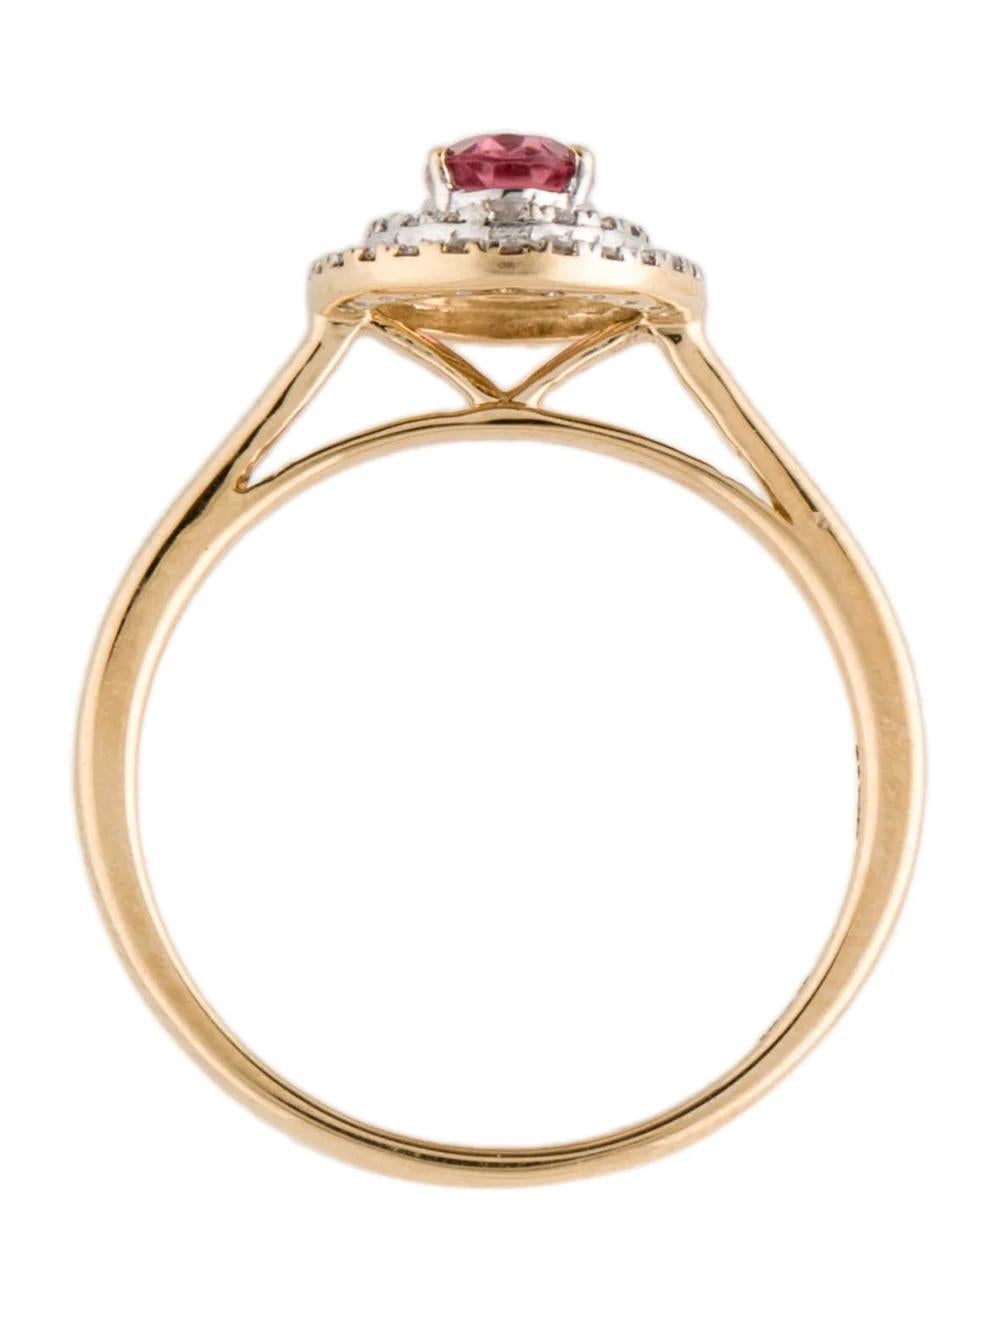 Women's Vintage 14K Tourmaline & Diamond Cocktail Ring Size 6.5 -Statement Jewelry Piece